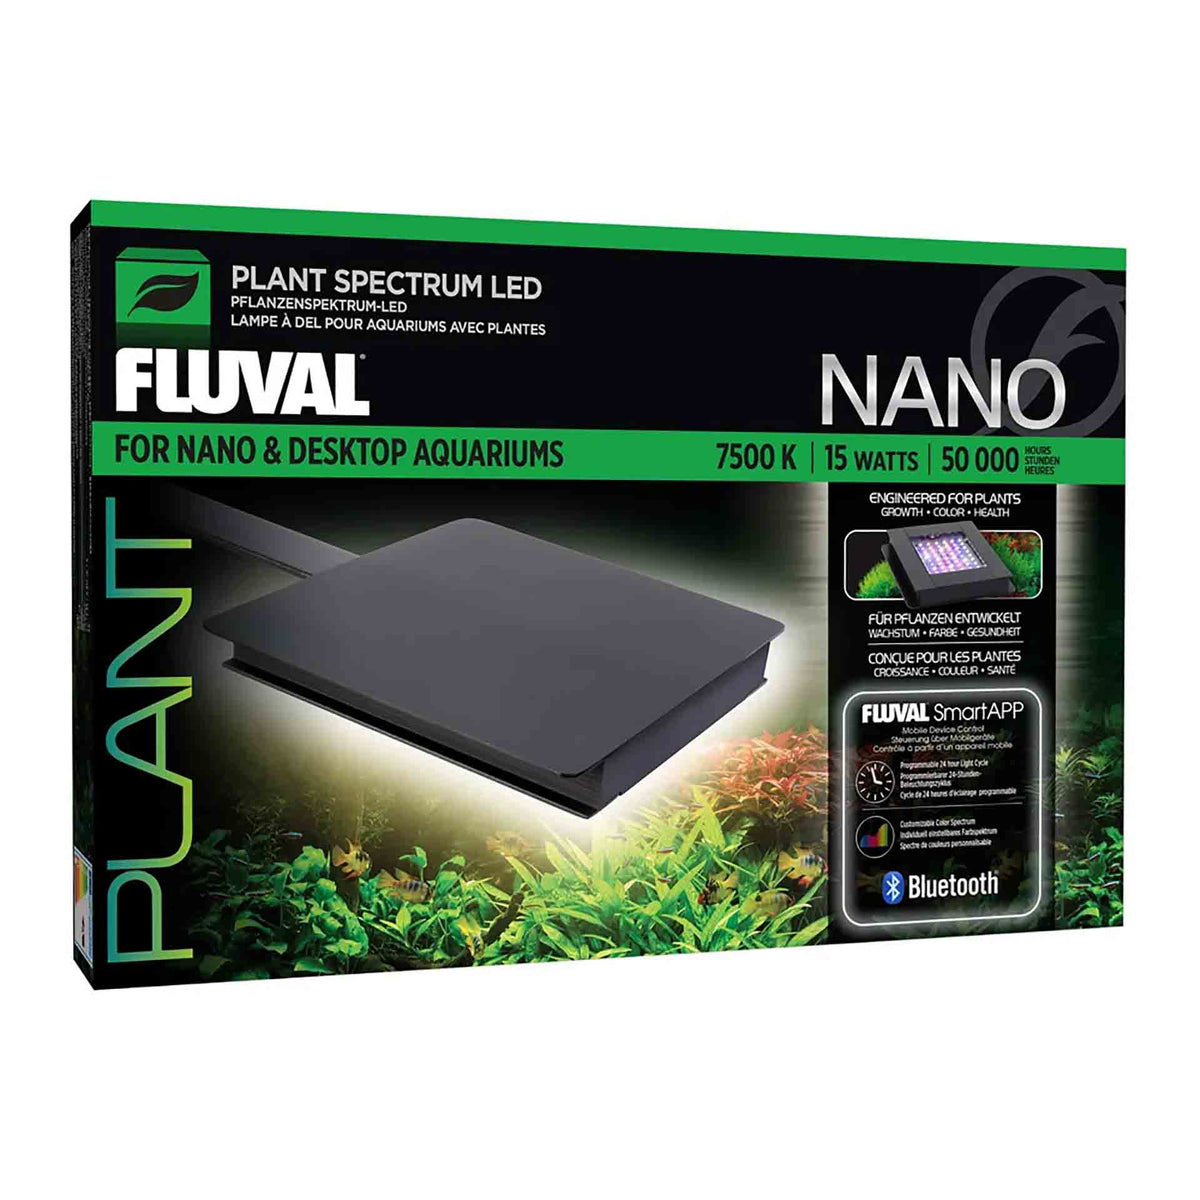 Fluval Nano Plant 3.0 LED Light with Bluetooth